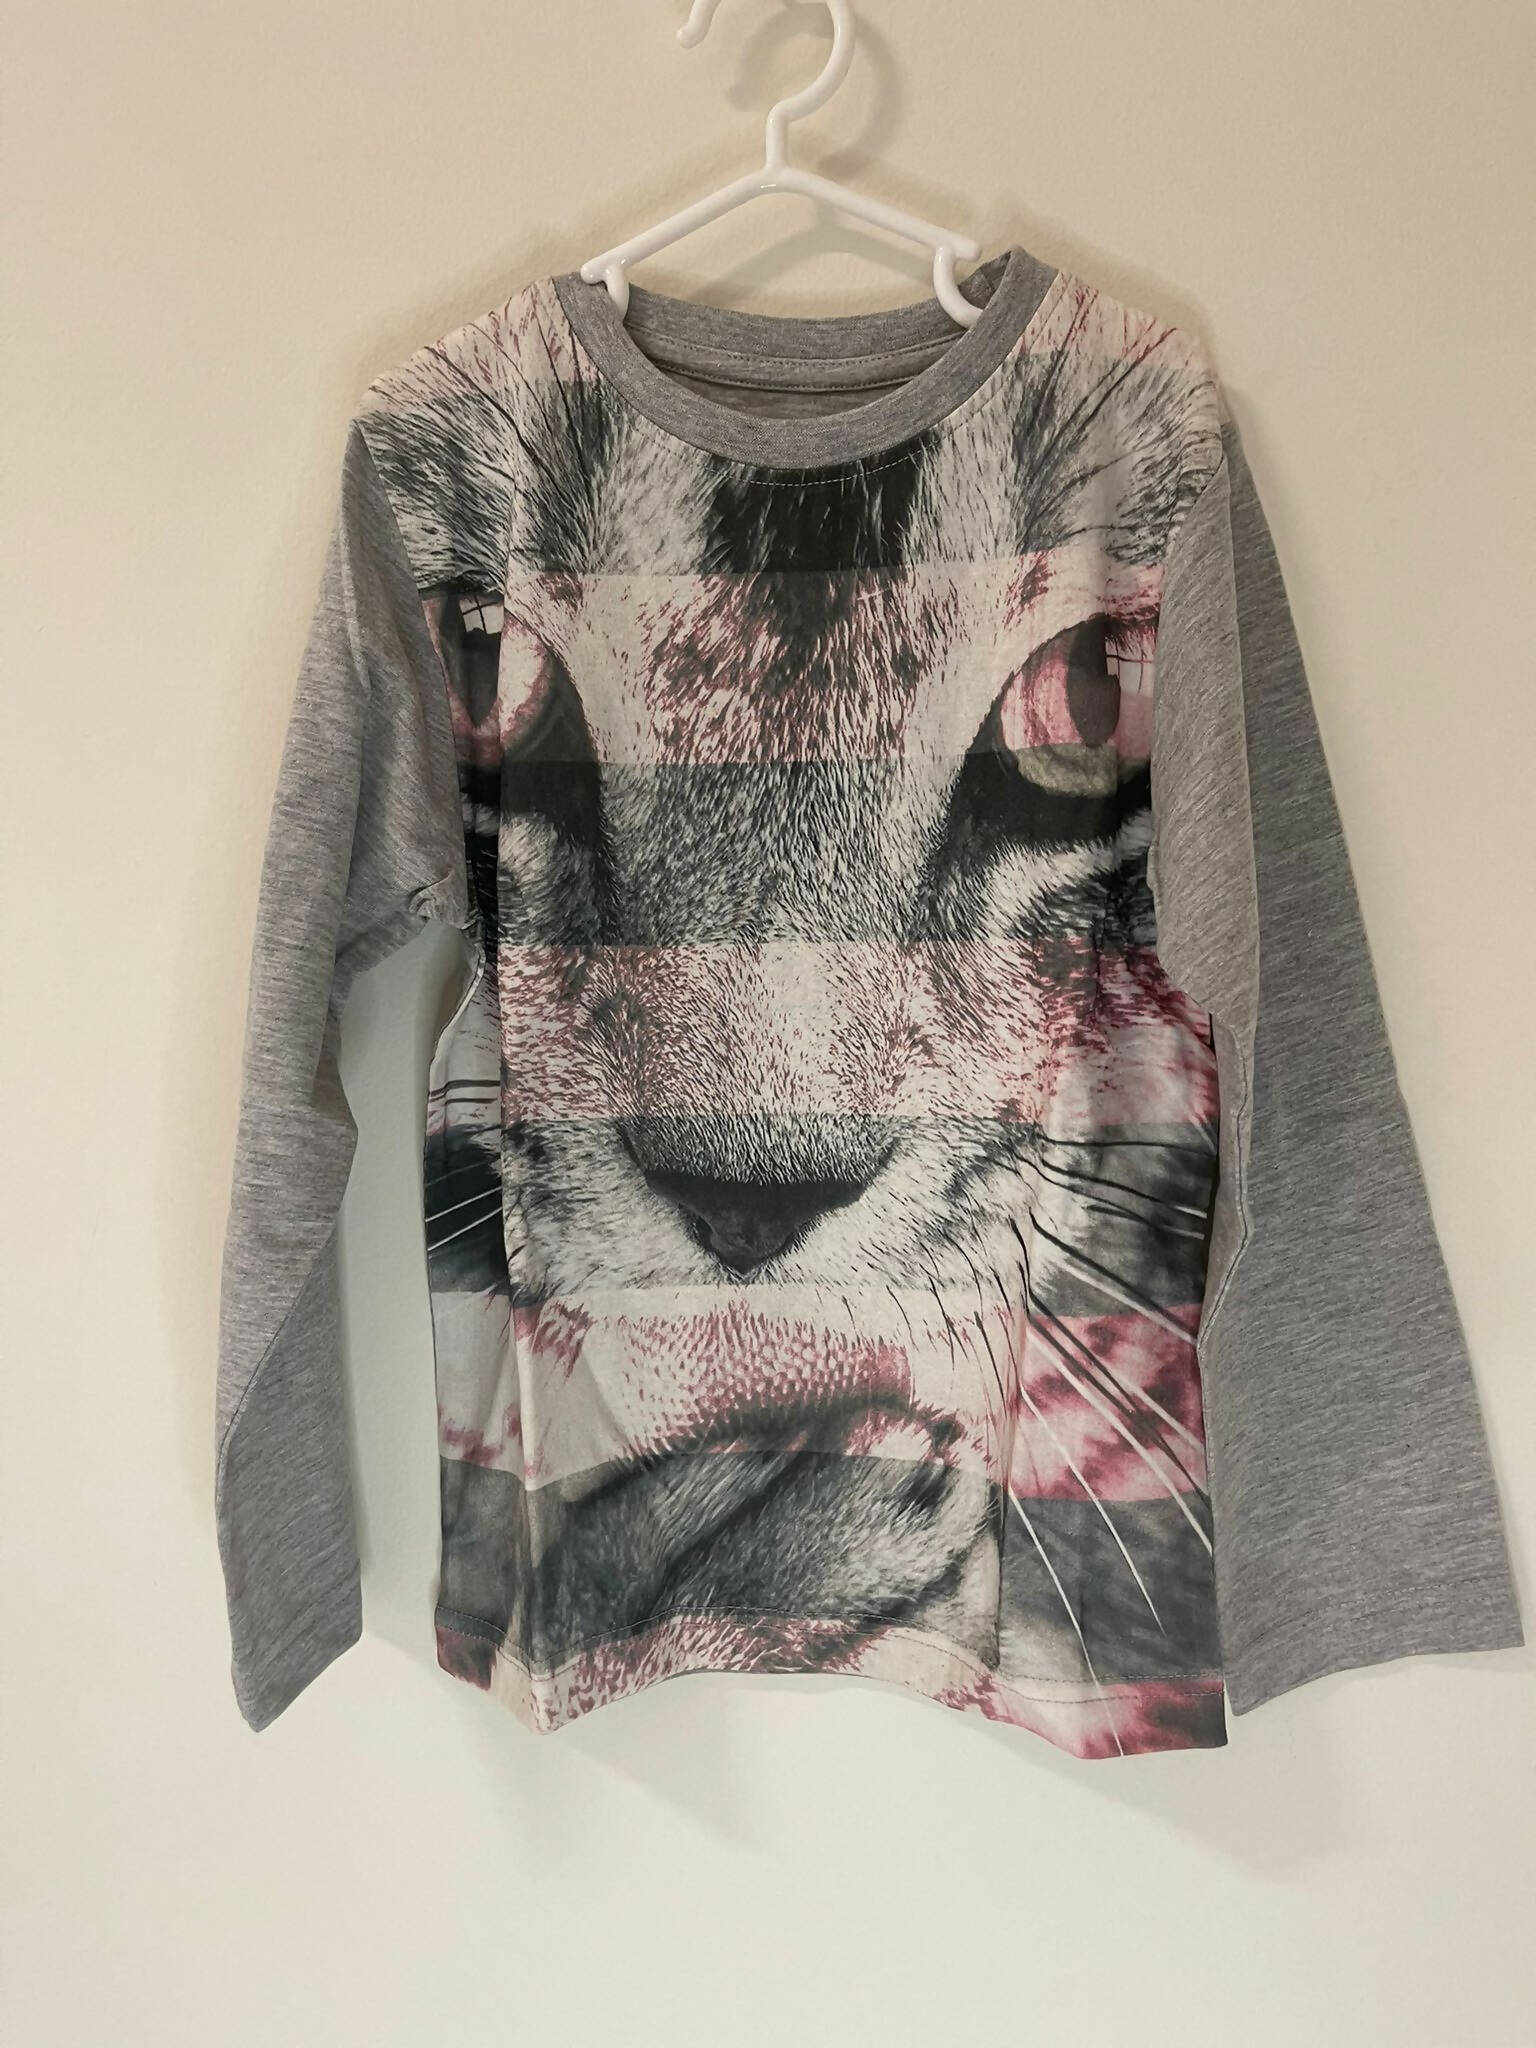 Grey Animal printed Shirt | Girls Tops & Shirts | Preloved